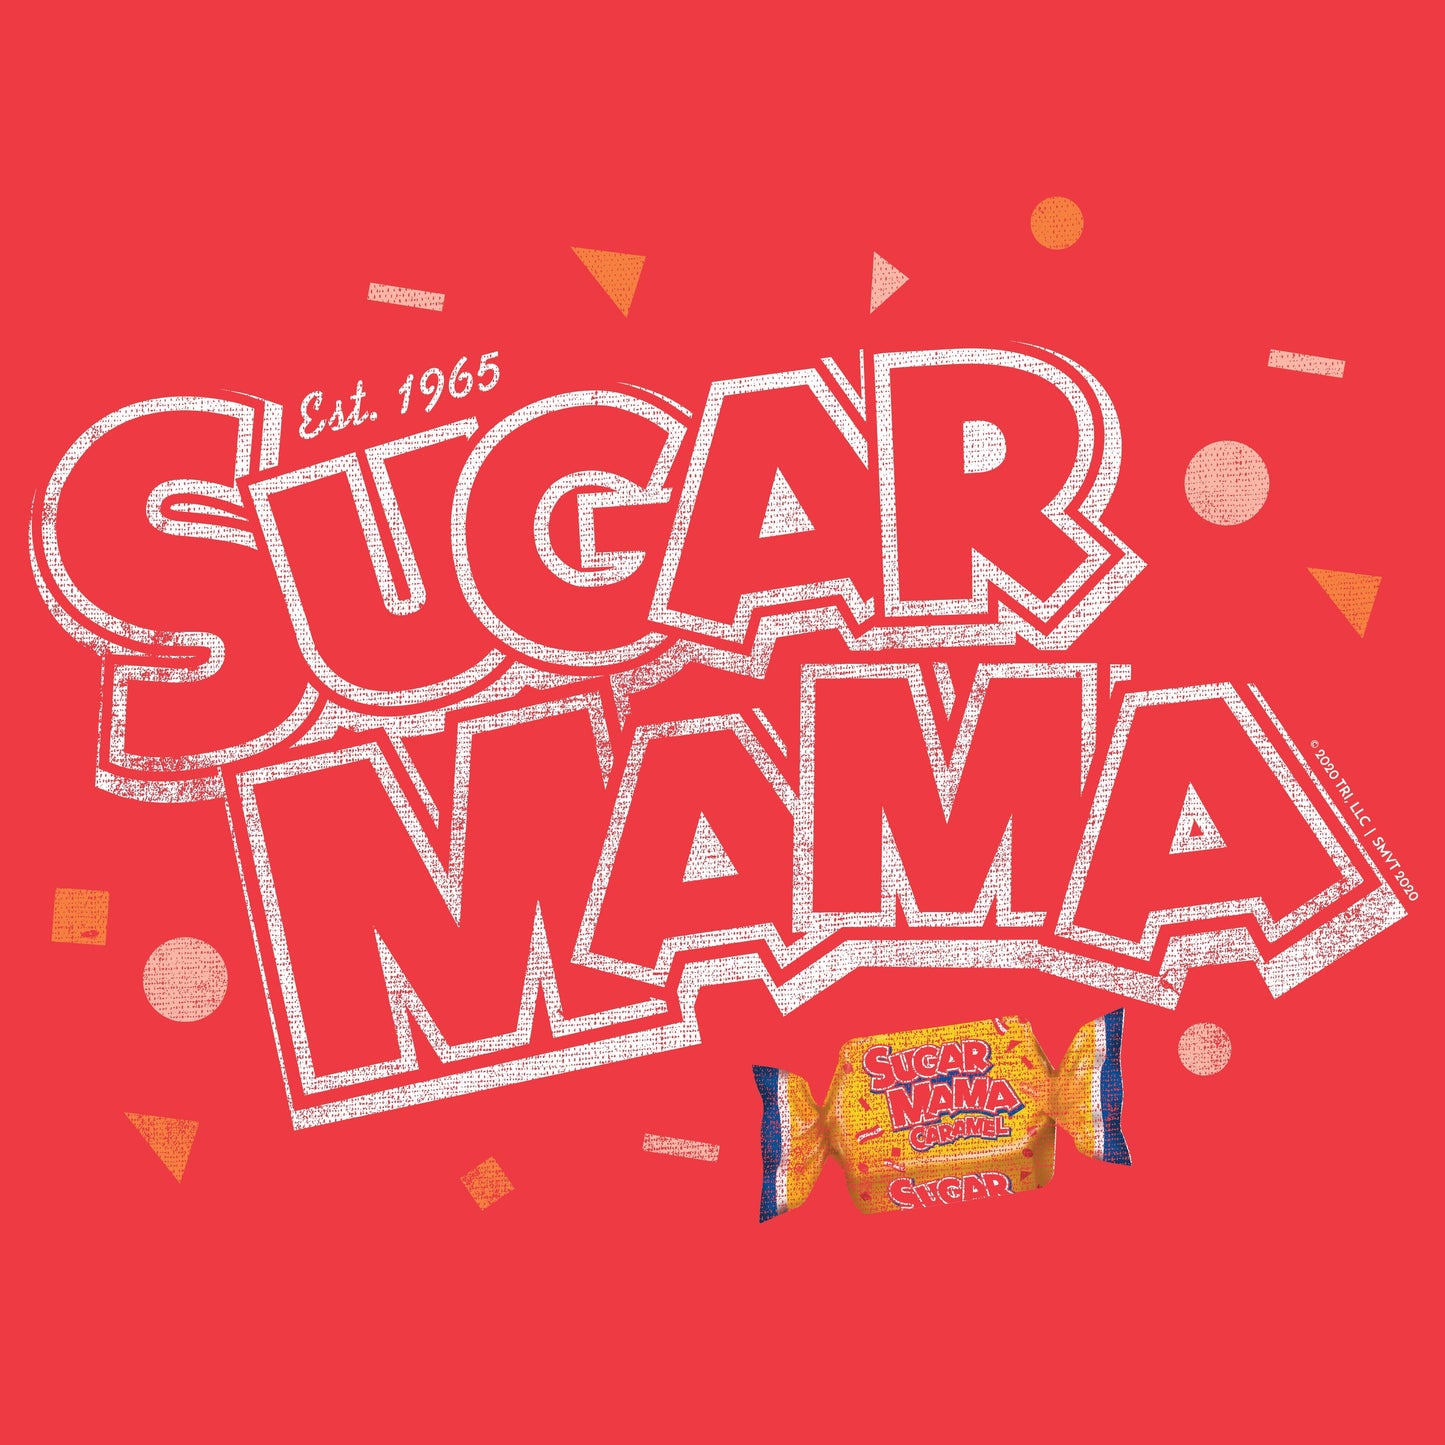 Sugar Mama Who's Your Mama? Tee